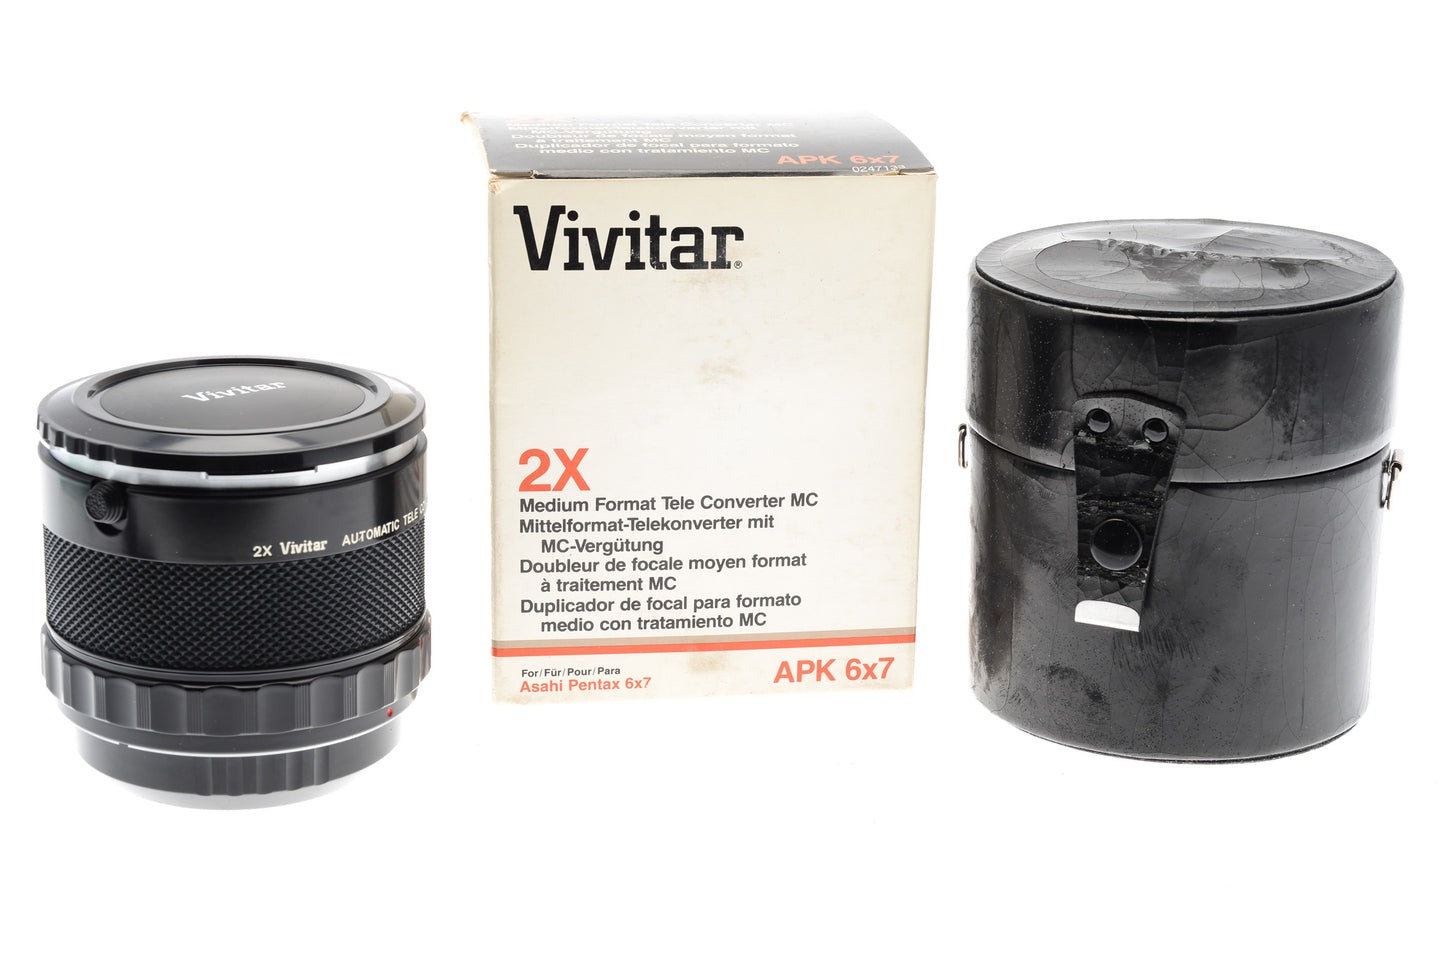 Vivitar 2x Medium Format Teleconverter MC